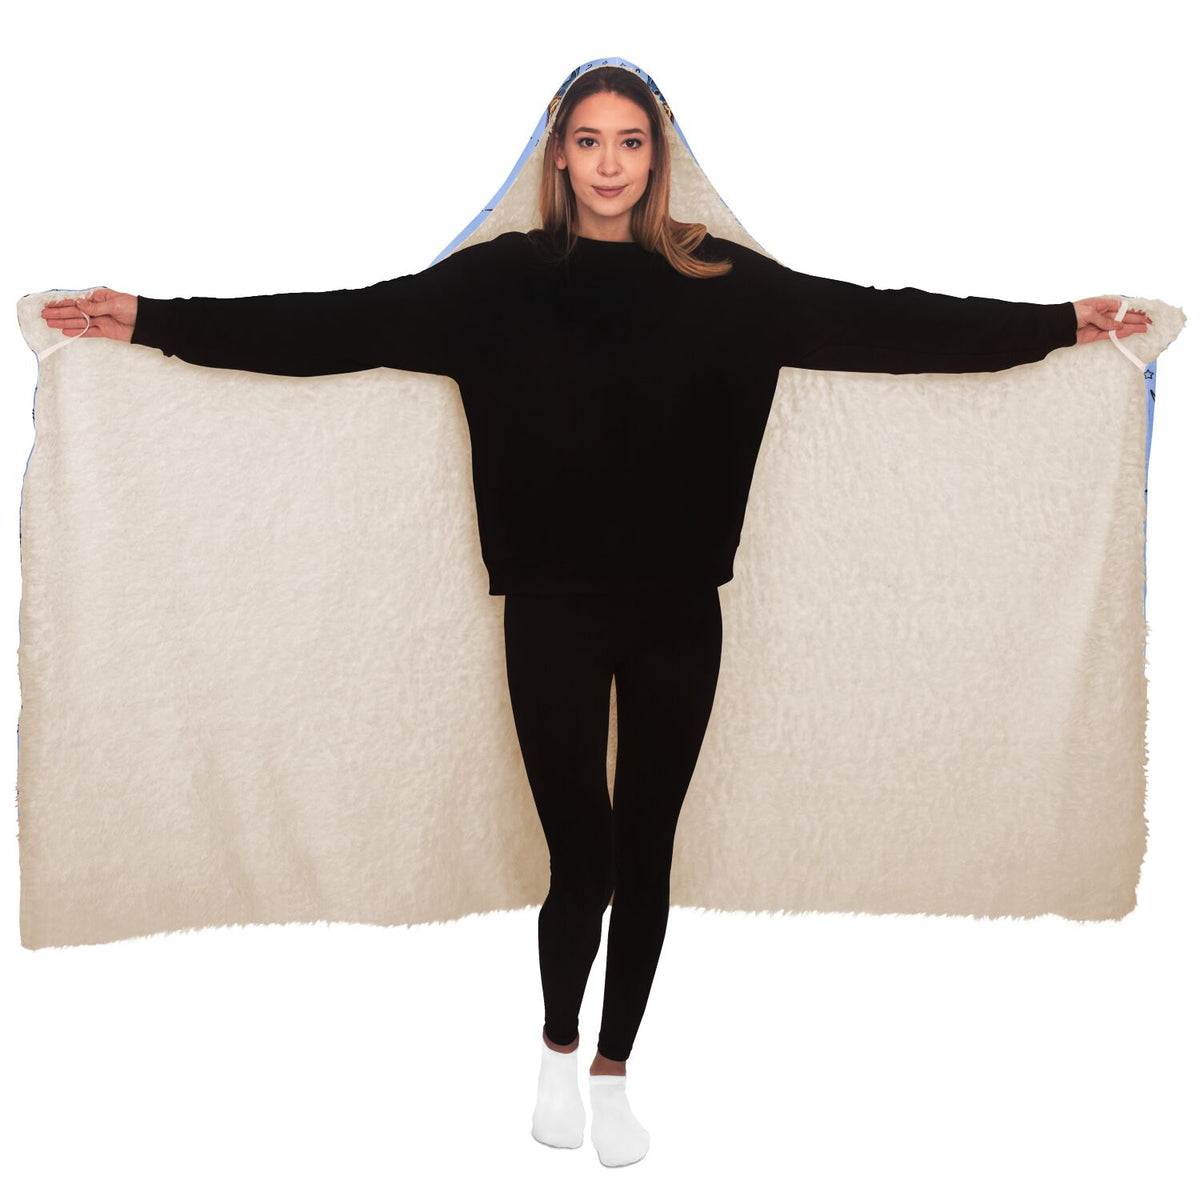 woman standing in doberman blanket